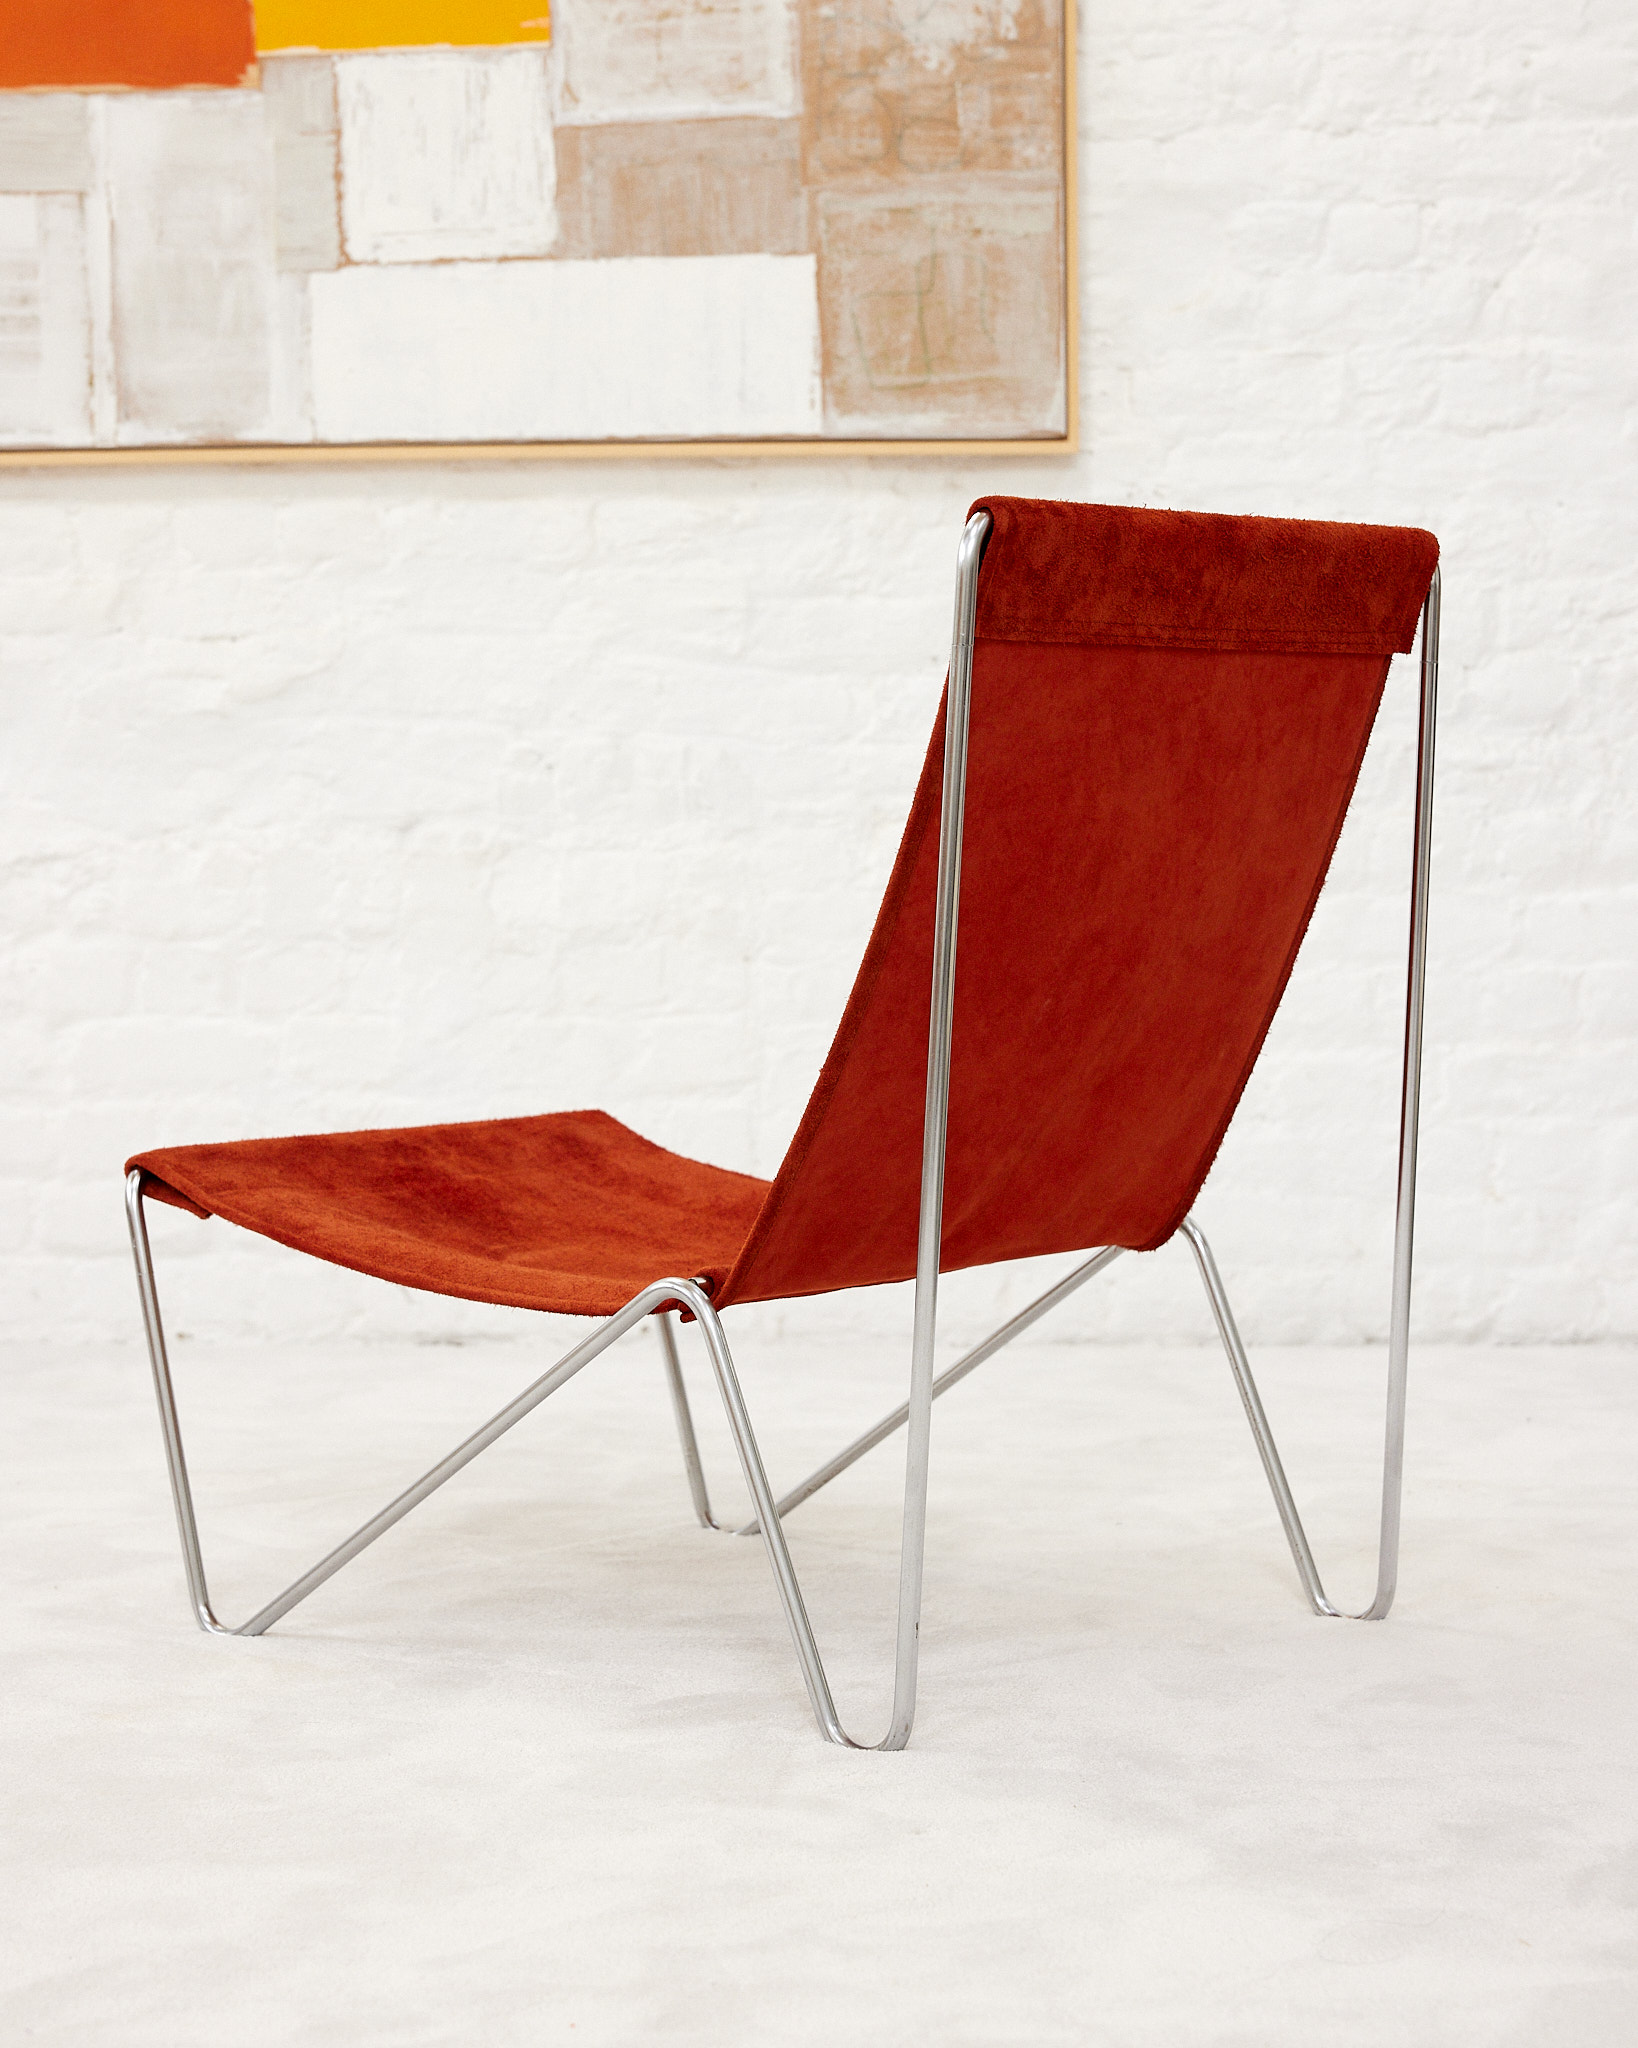 Bachelor Chair by Verner Panton